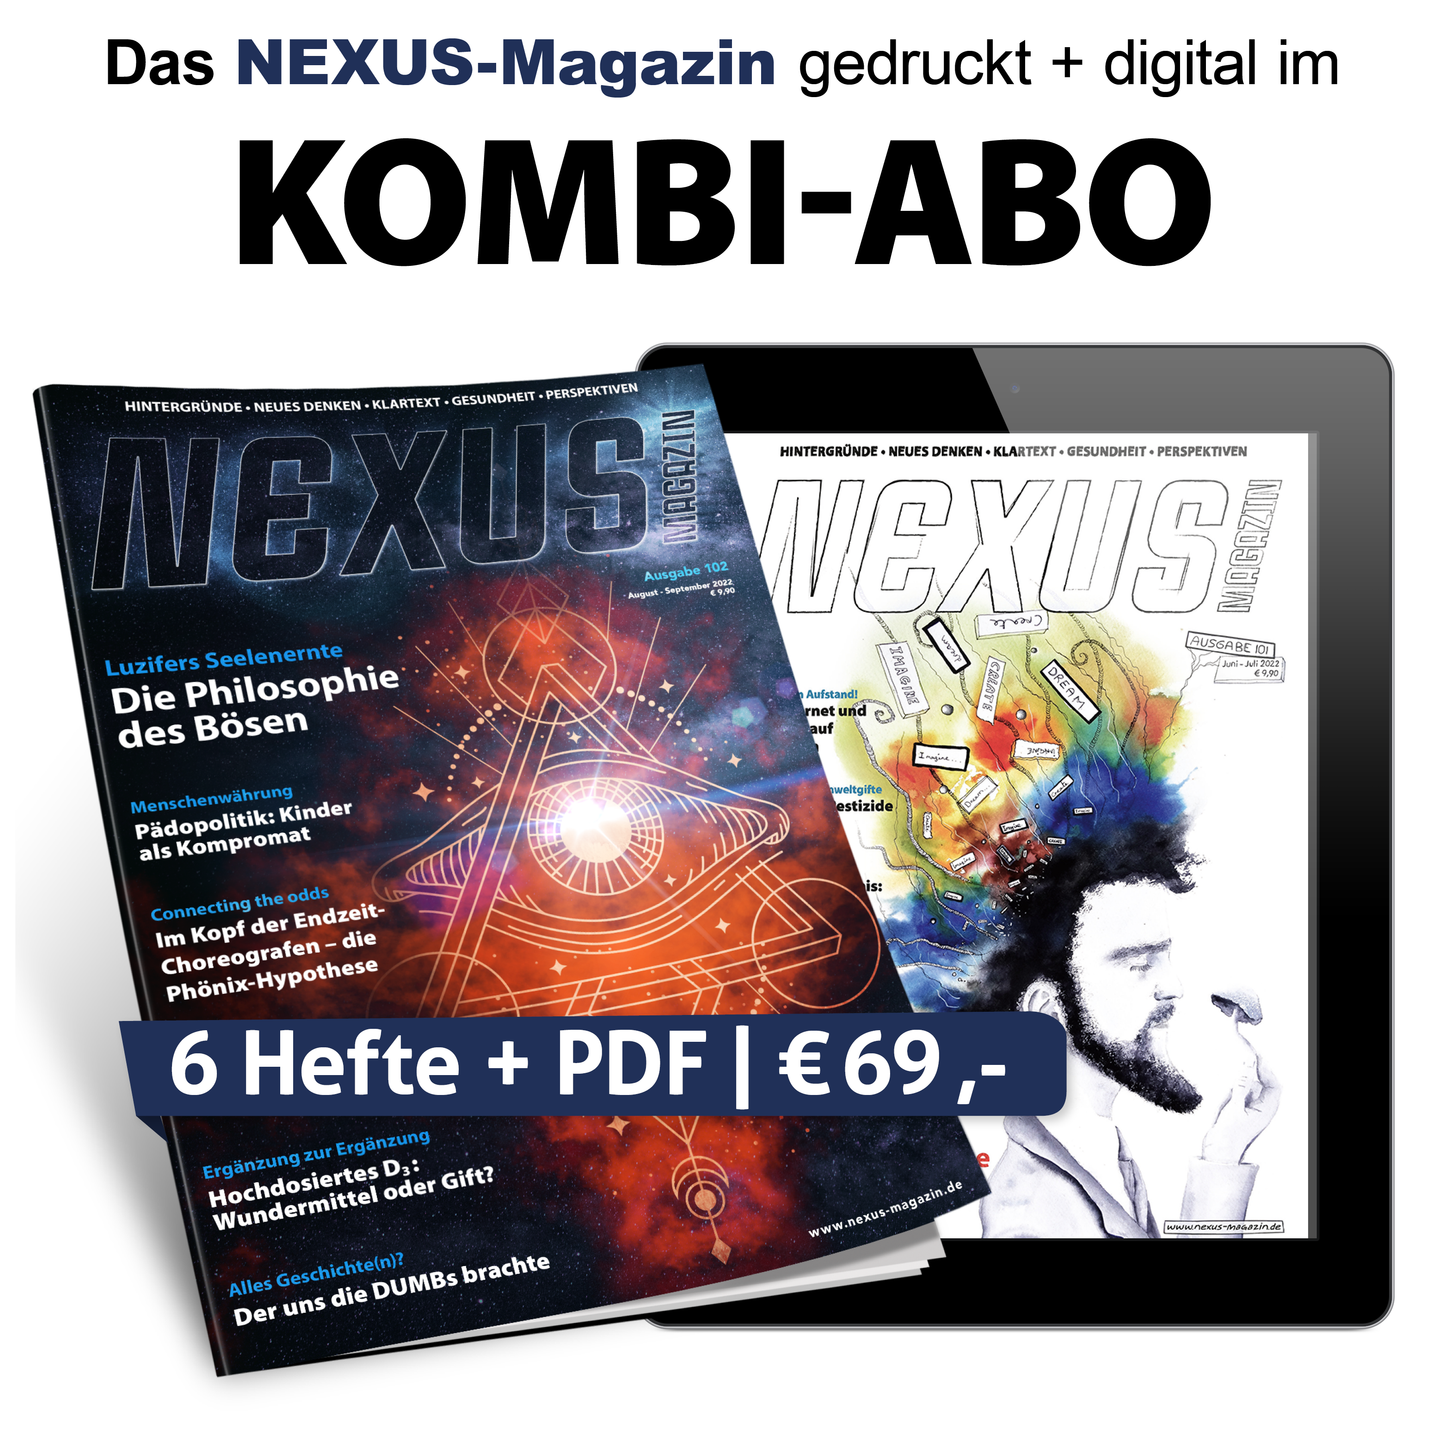 NEXUS-Magazin Jahresabonnement (Kombi-Abo Print & Digital)